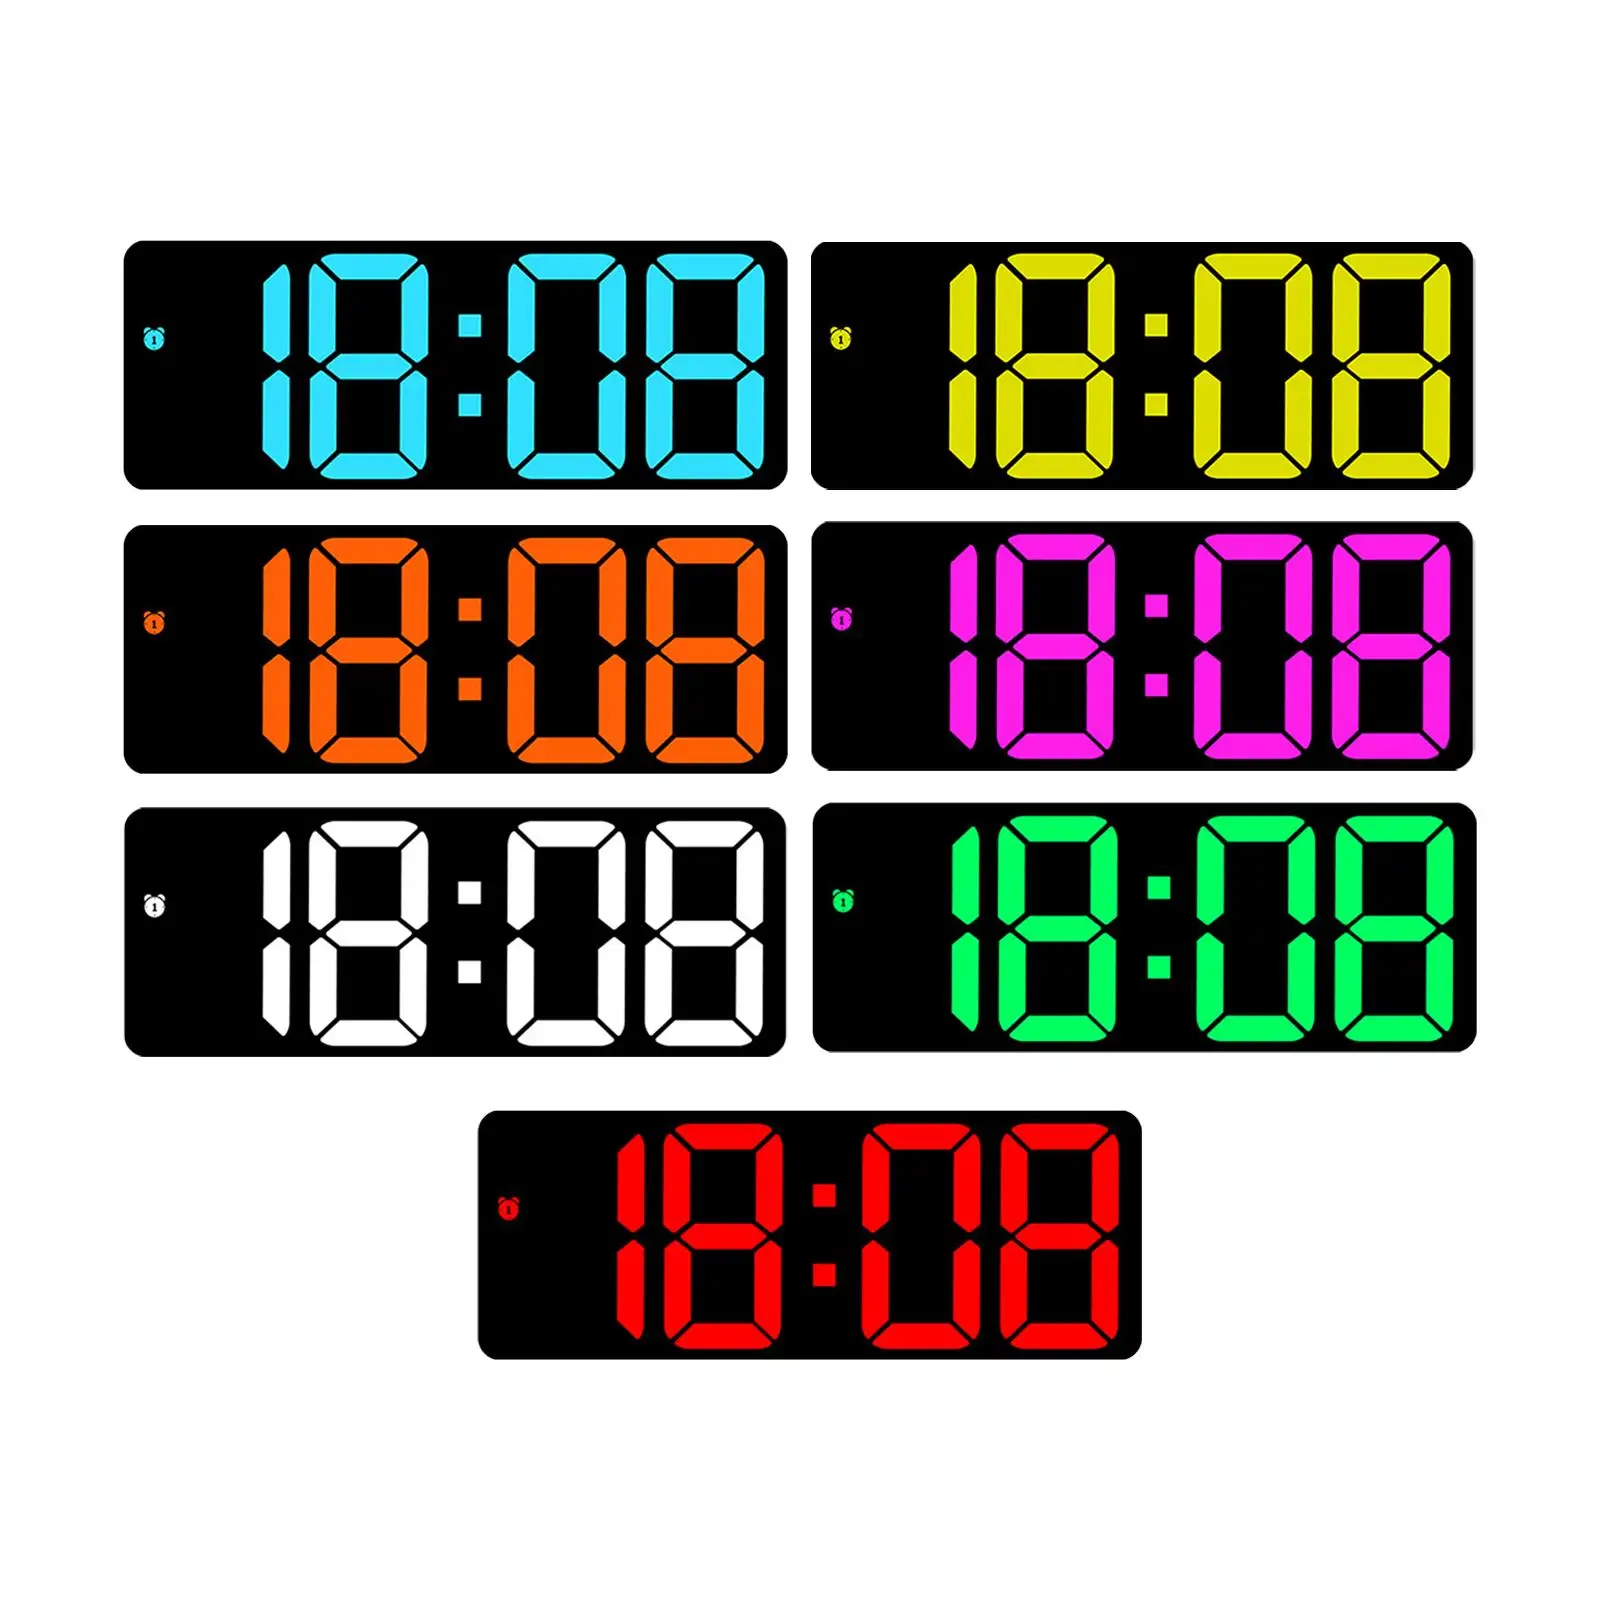 Digital Desk Clock Adjustable Brightness Calendar Desk Modern Voice Controlled